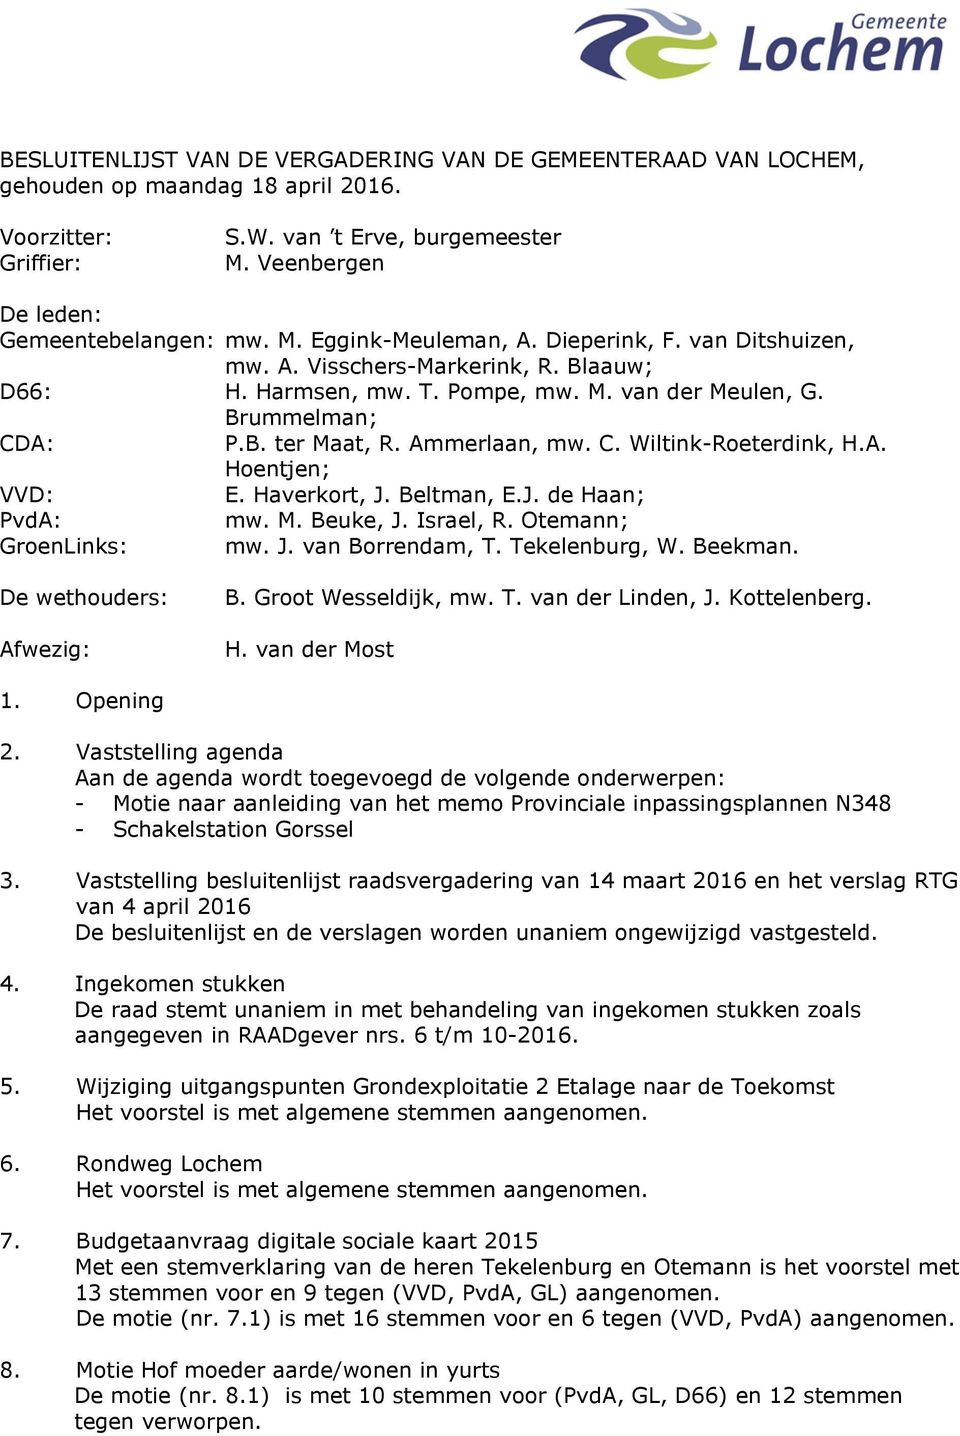 C. Wiltink-Roeterdink, H.A. Hoentjen; VVD: E. Haverkort, J. Beltman, E.J. de Haan; PvdA: mw. M. Beuke, J. Israel, R. Otemann; GroenLinks: mw. J. van Borrendam, T. Tekelenburg, W. Beekman.